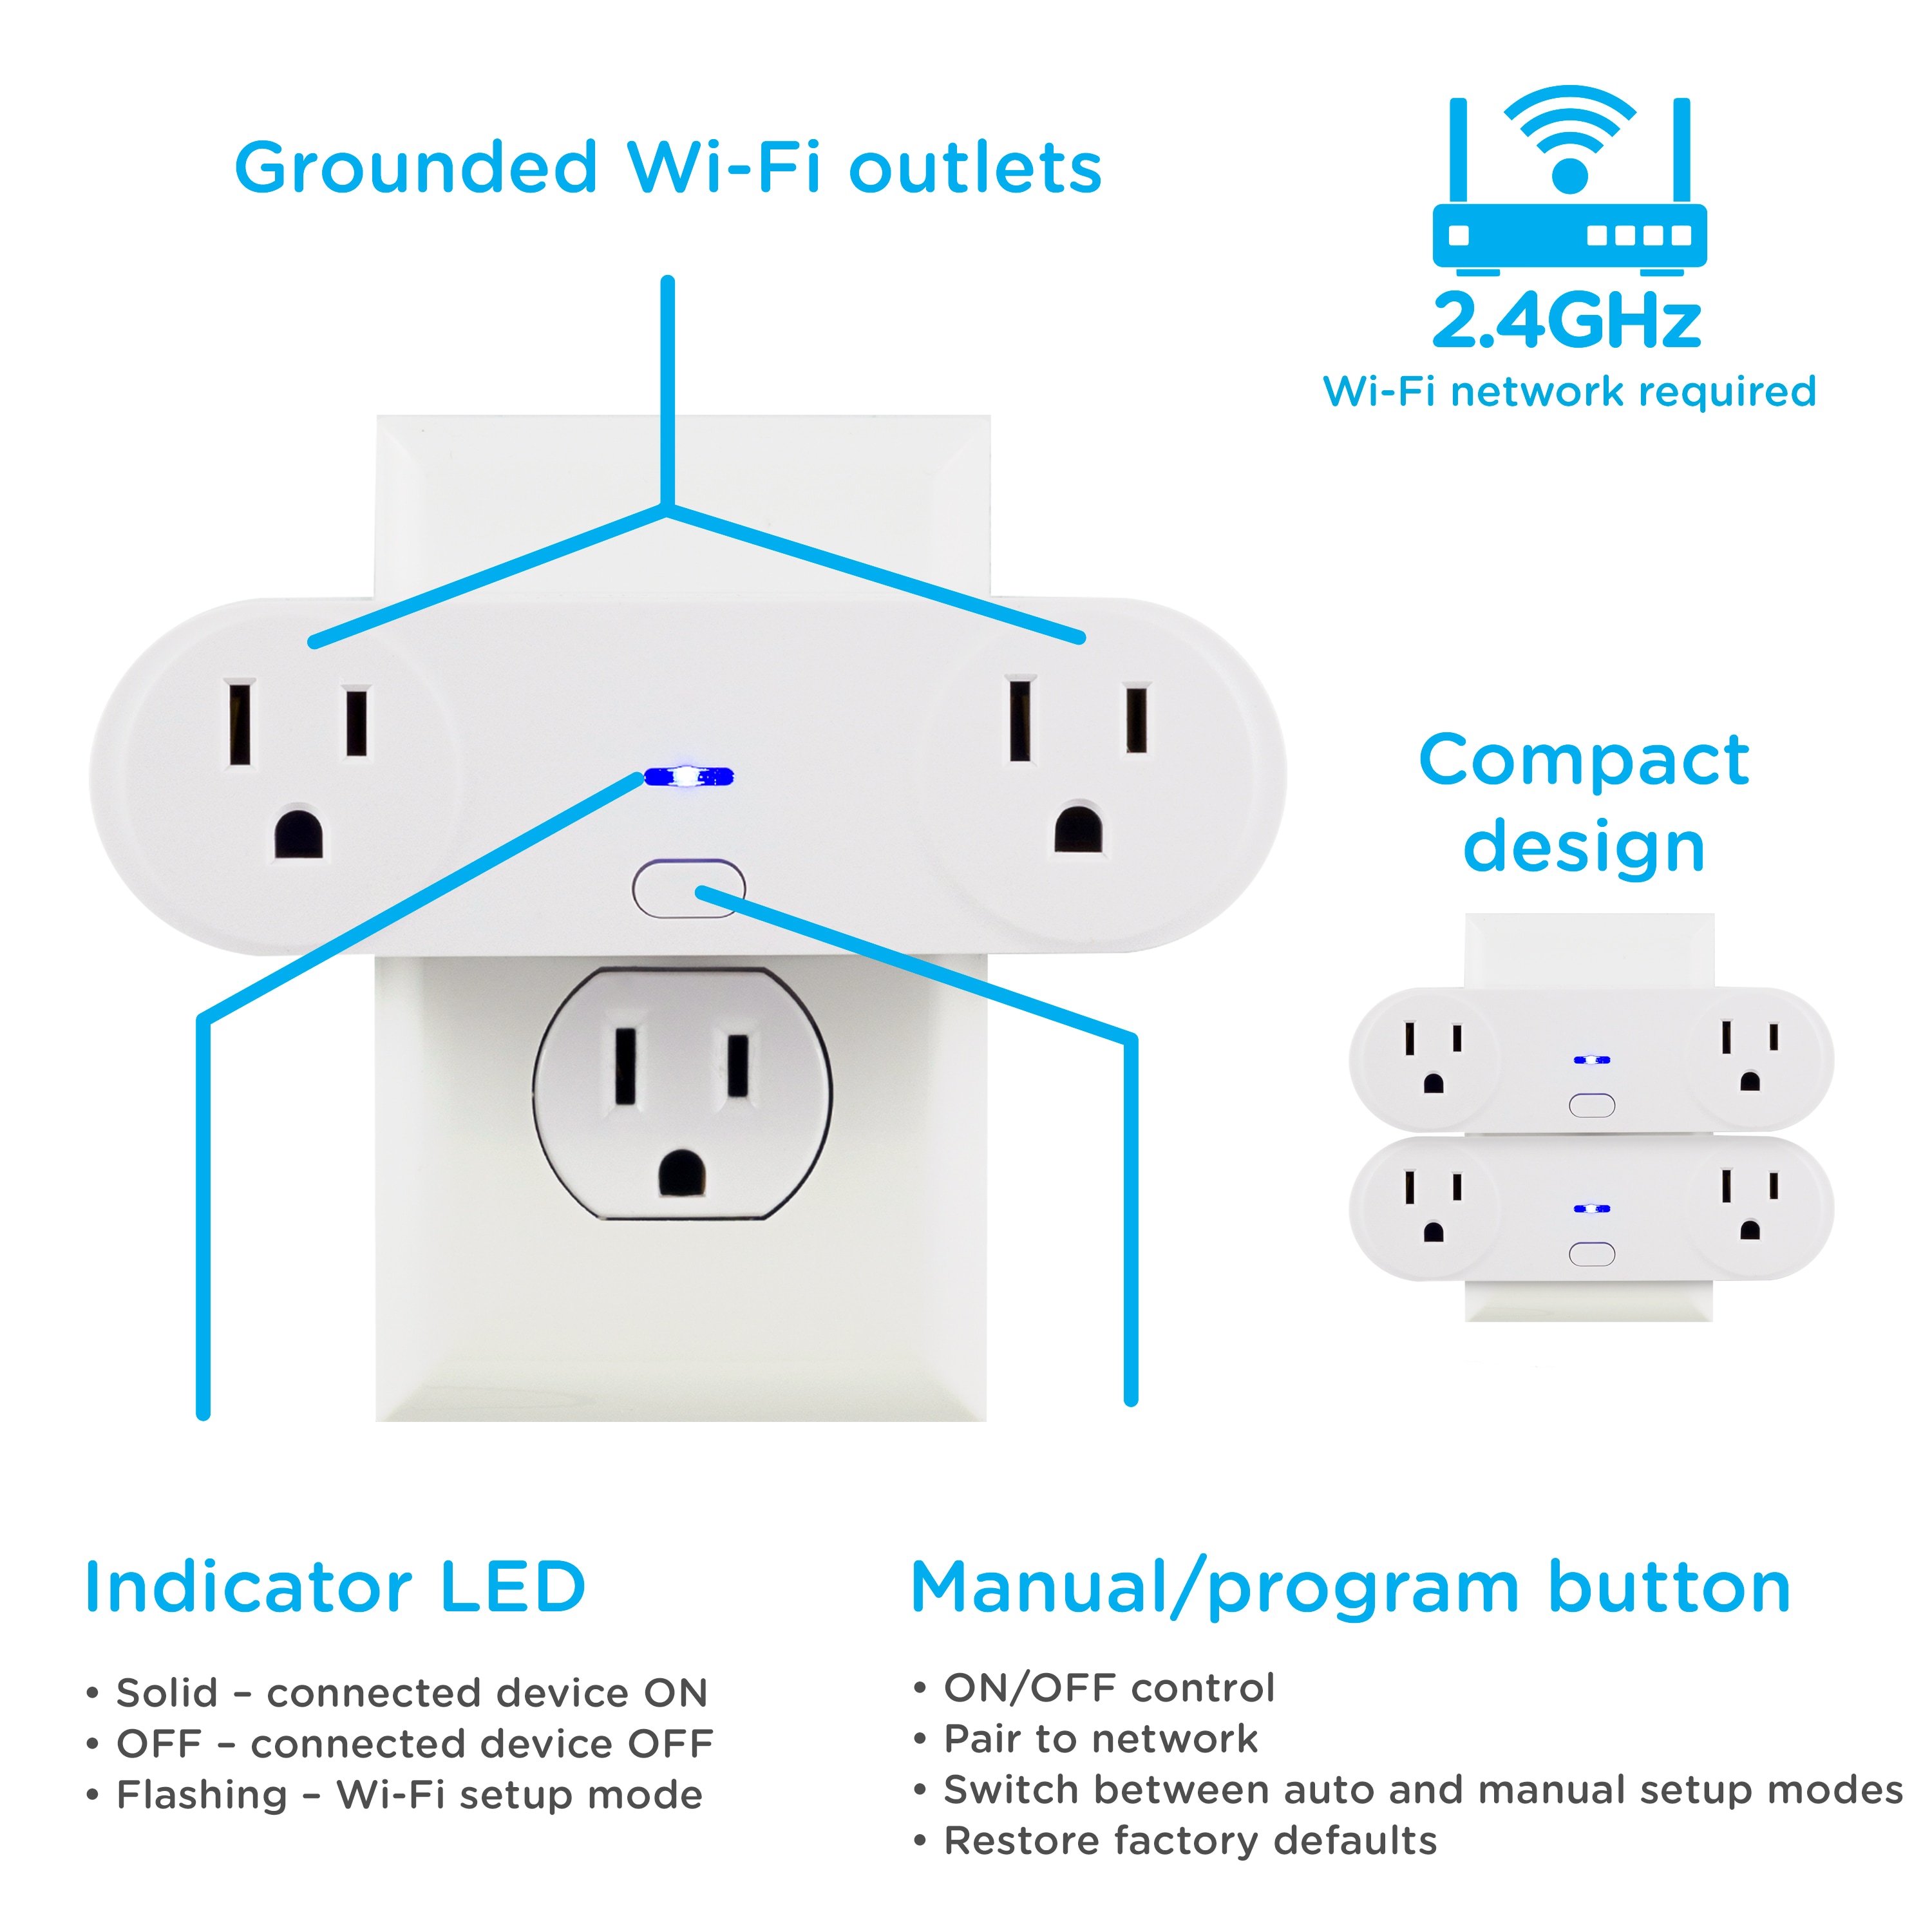 Enbrighten Mini Plug-In Wi-Fi Smart Switch: 125-volt: 1-Outlet Indoor Smart  Plug